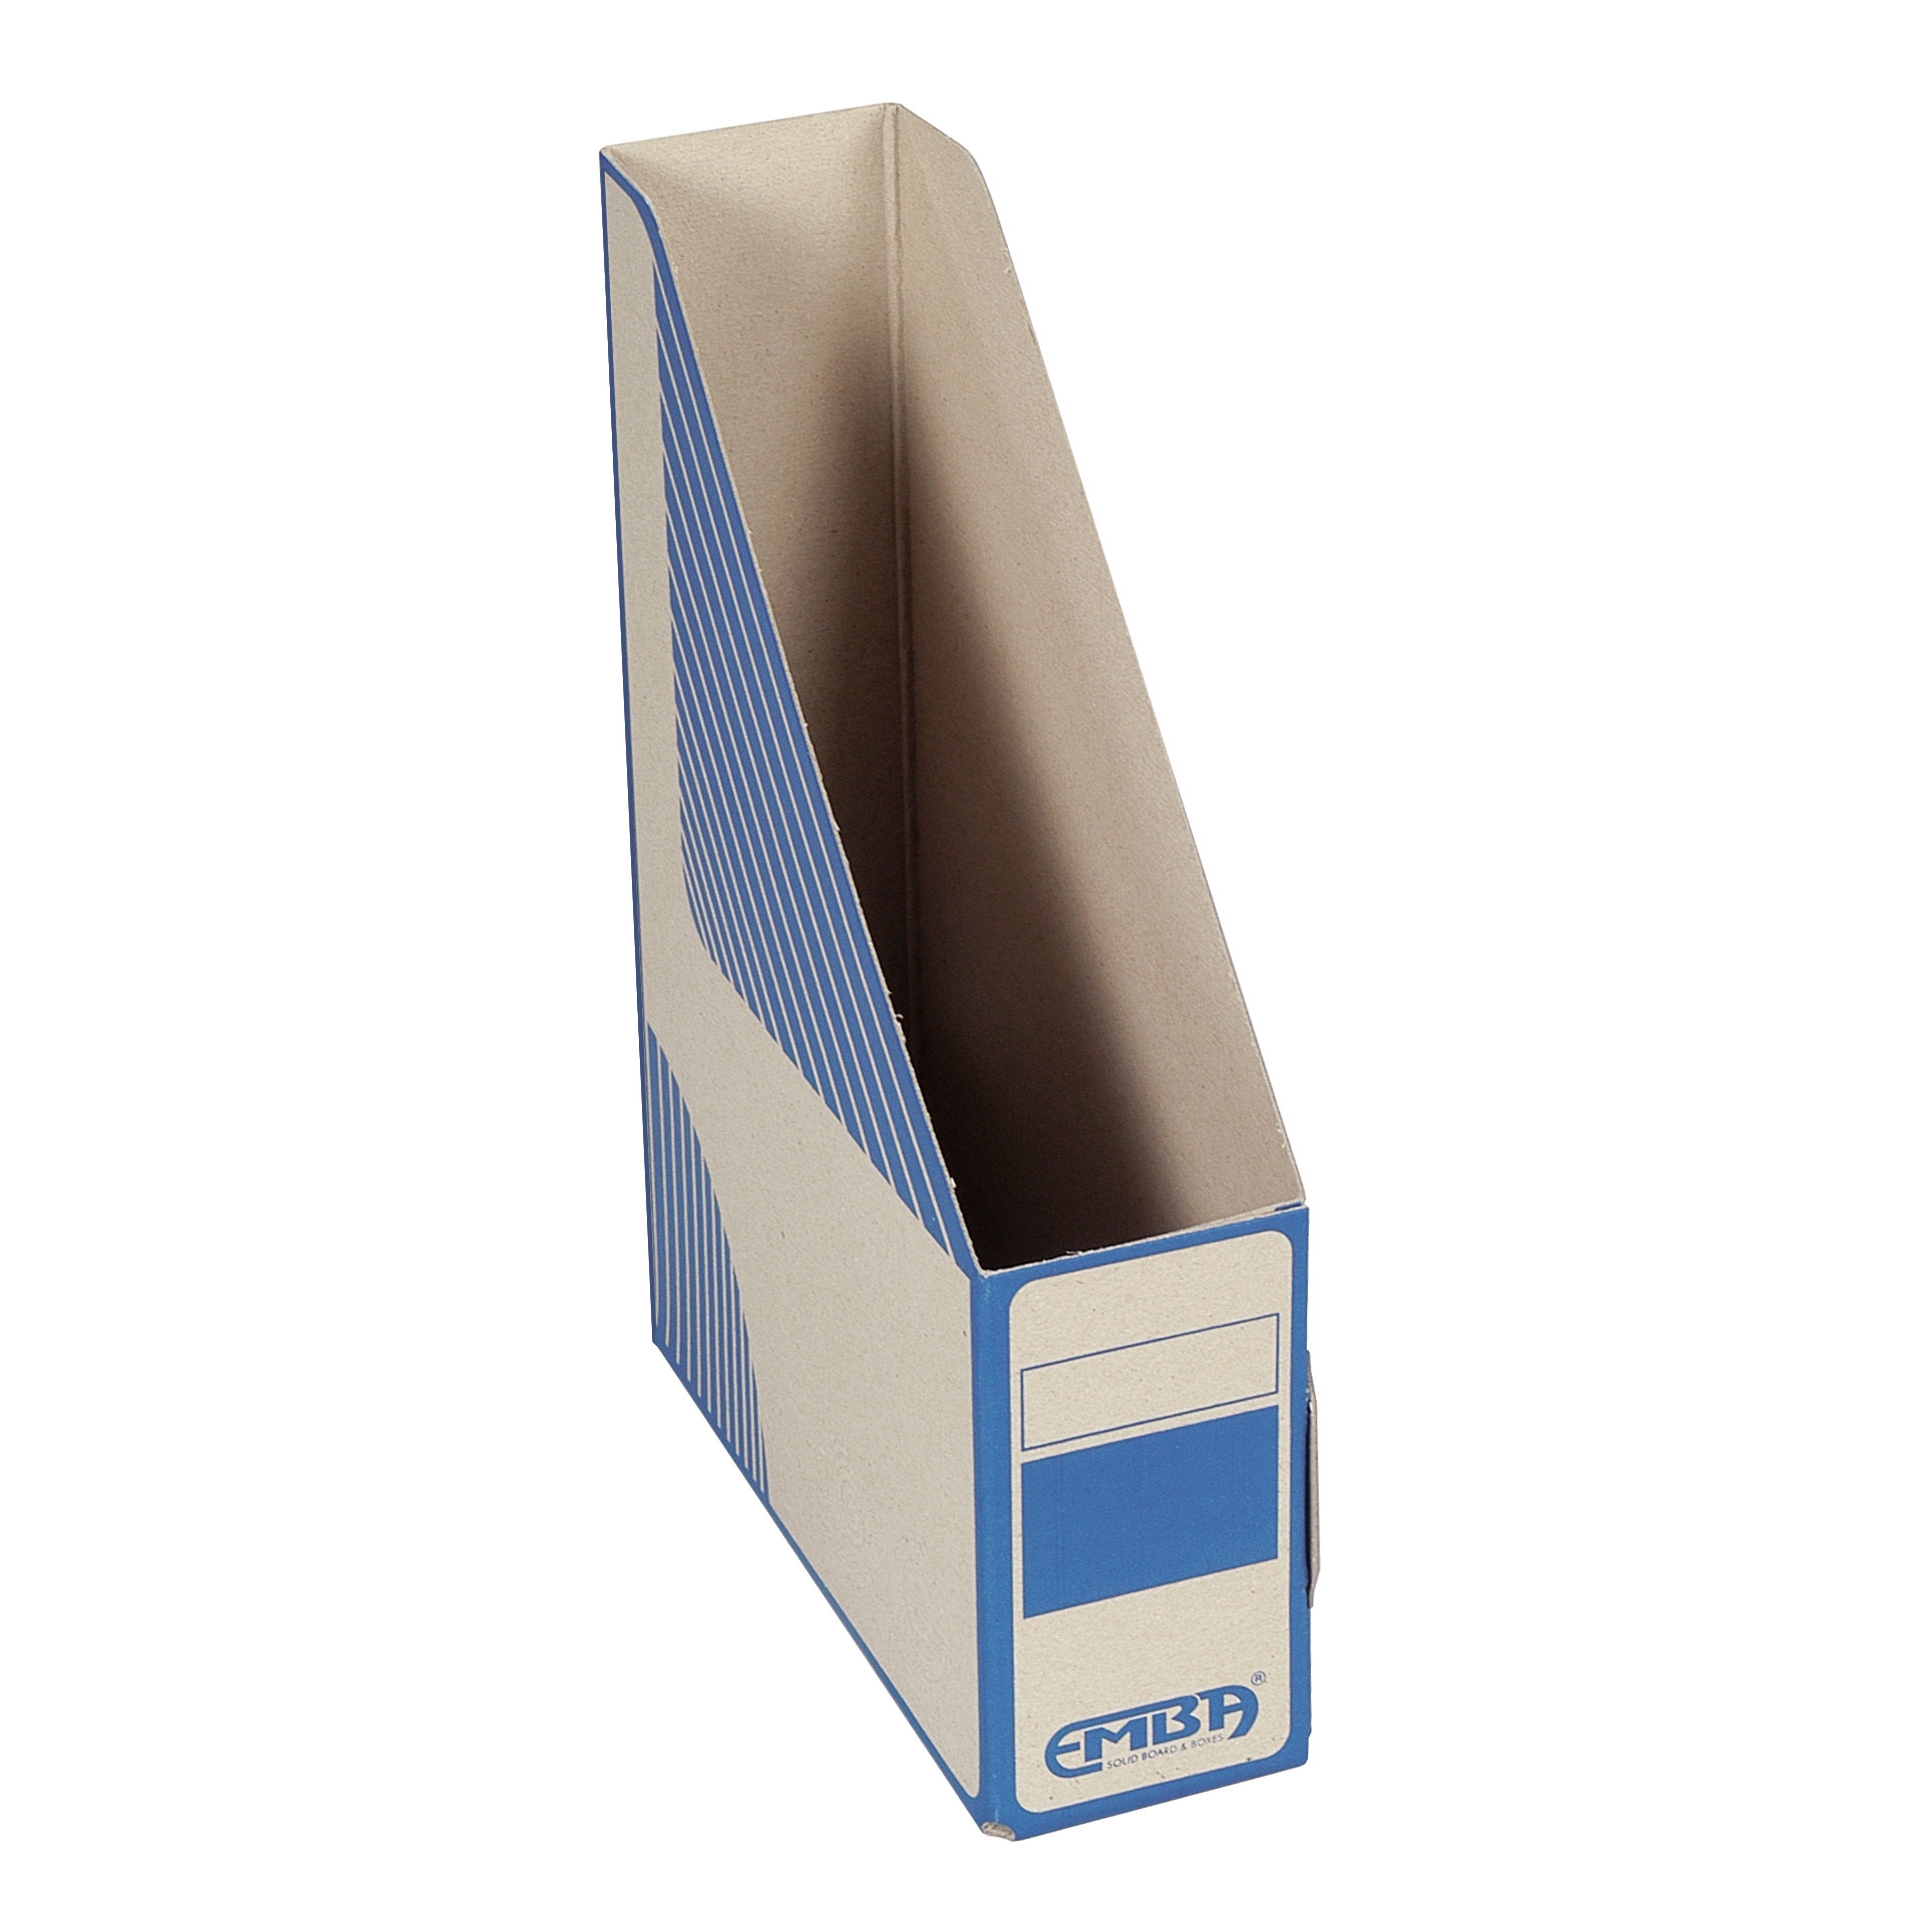 Dokument box Emba 330-230-75, kartonový, modrý